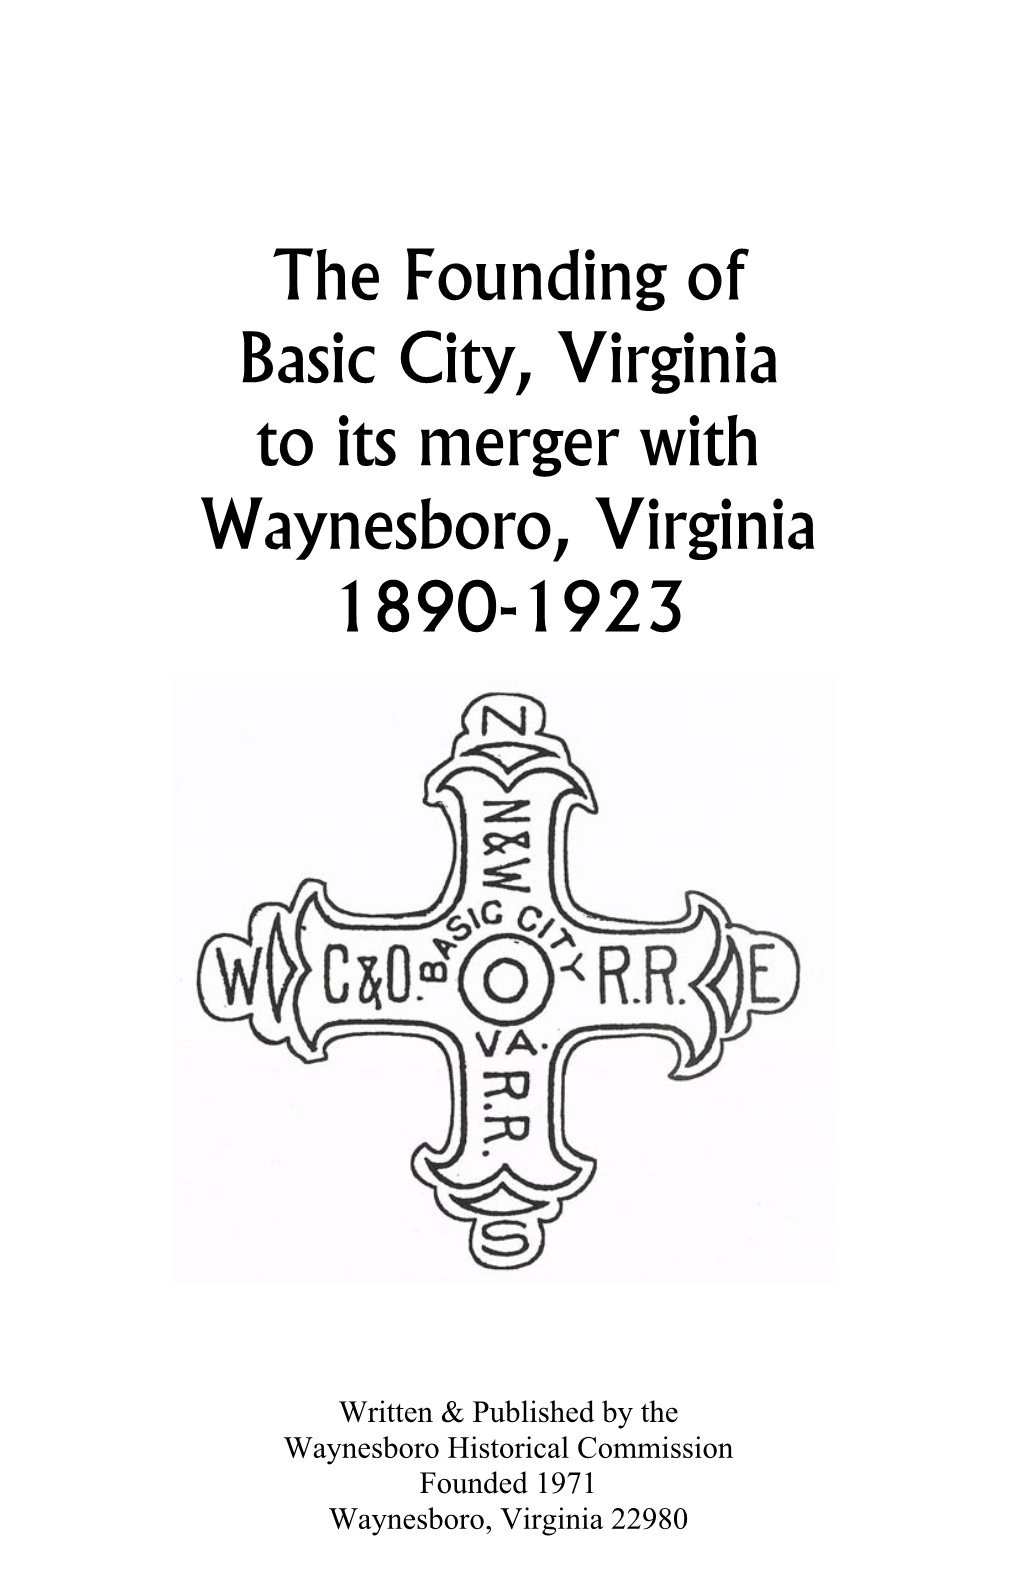 The Founding of Basic City, Virginia to Its Merger with Waynesboro, Virginia 1890-1923